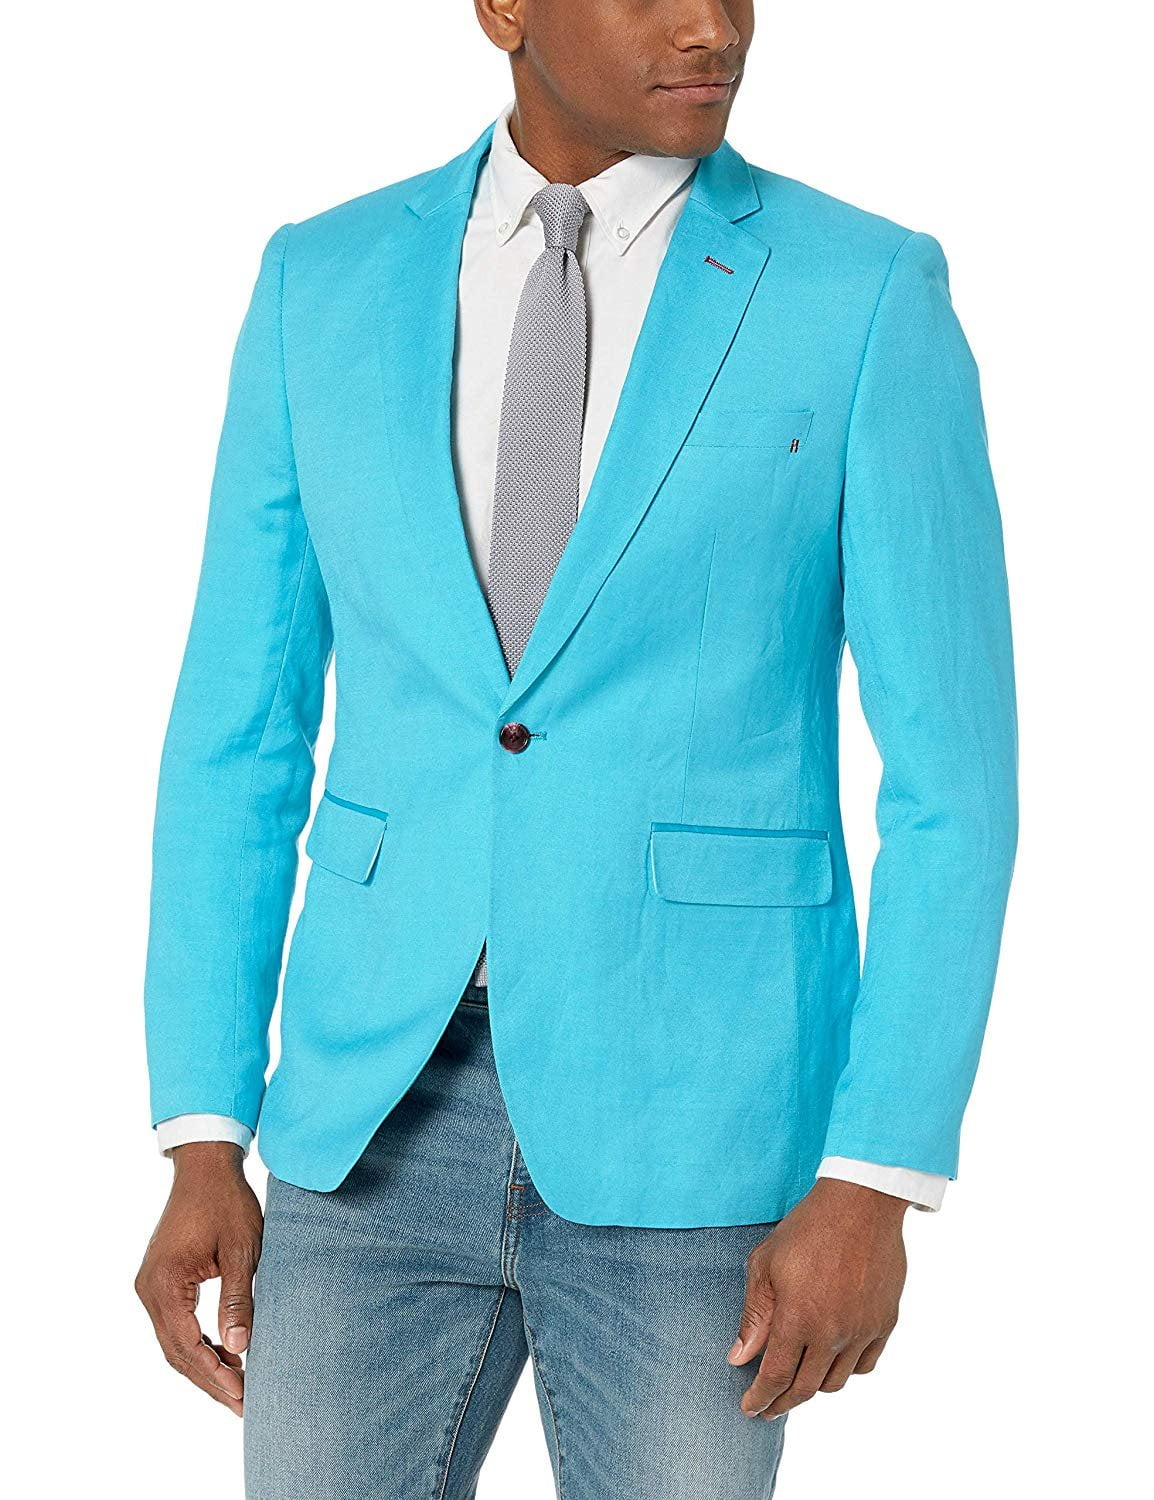 LOOKAA Coat Men/'s Slim Fit Linen Blend Pocket Solid Long Sleeve Suits Blazer Jacket Outwear